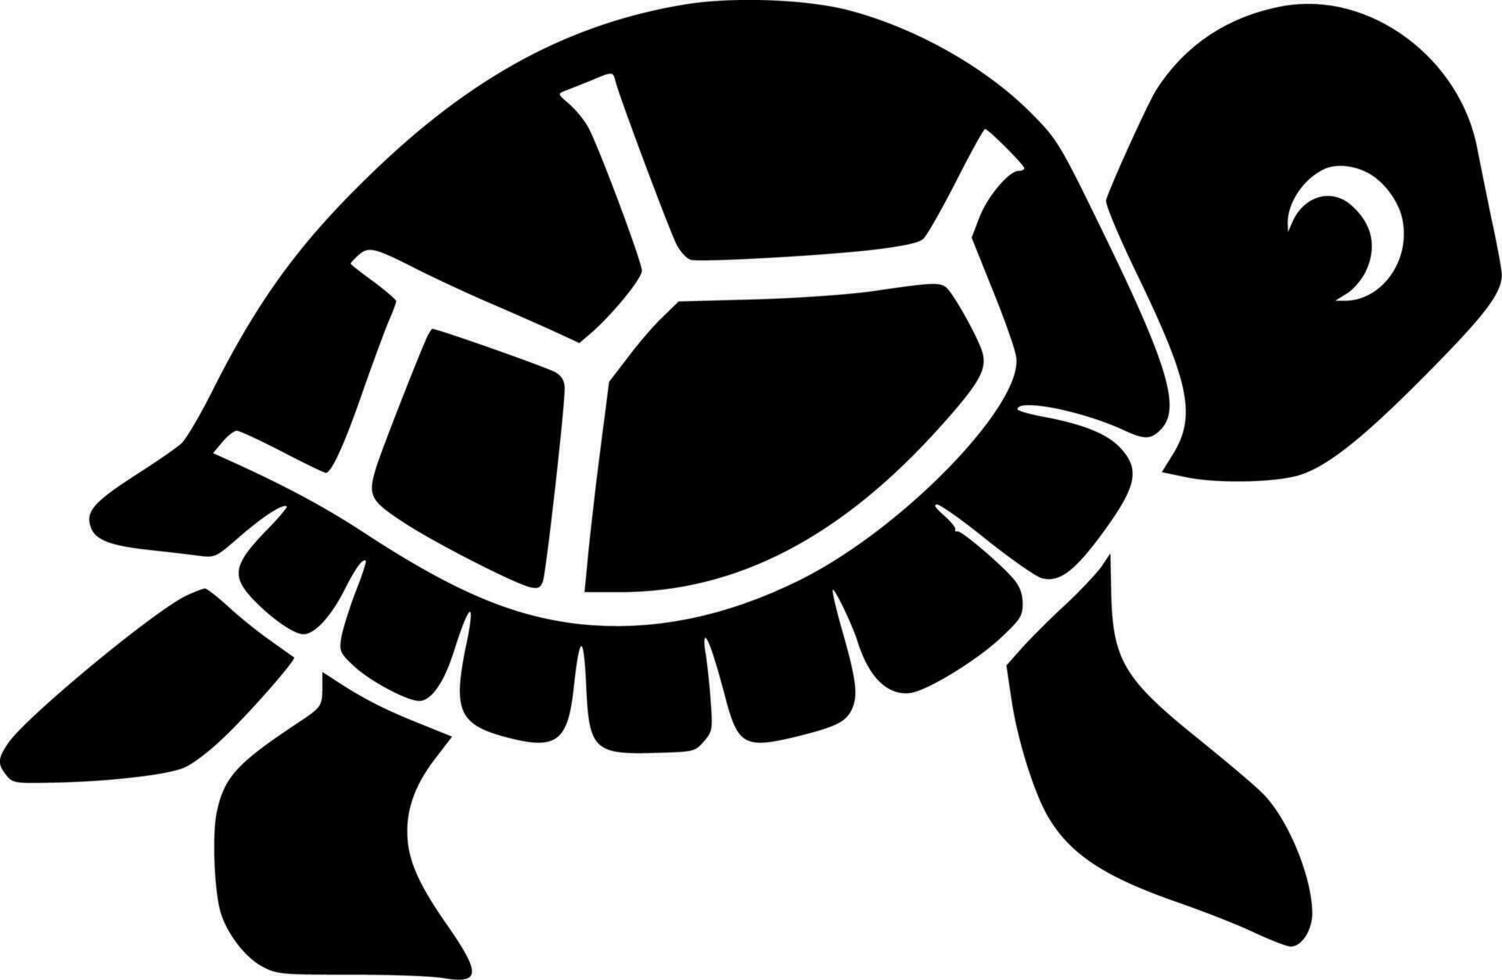 tartaruga, Preto e branco vetor ilustração